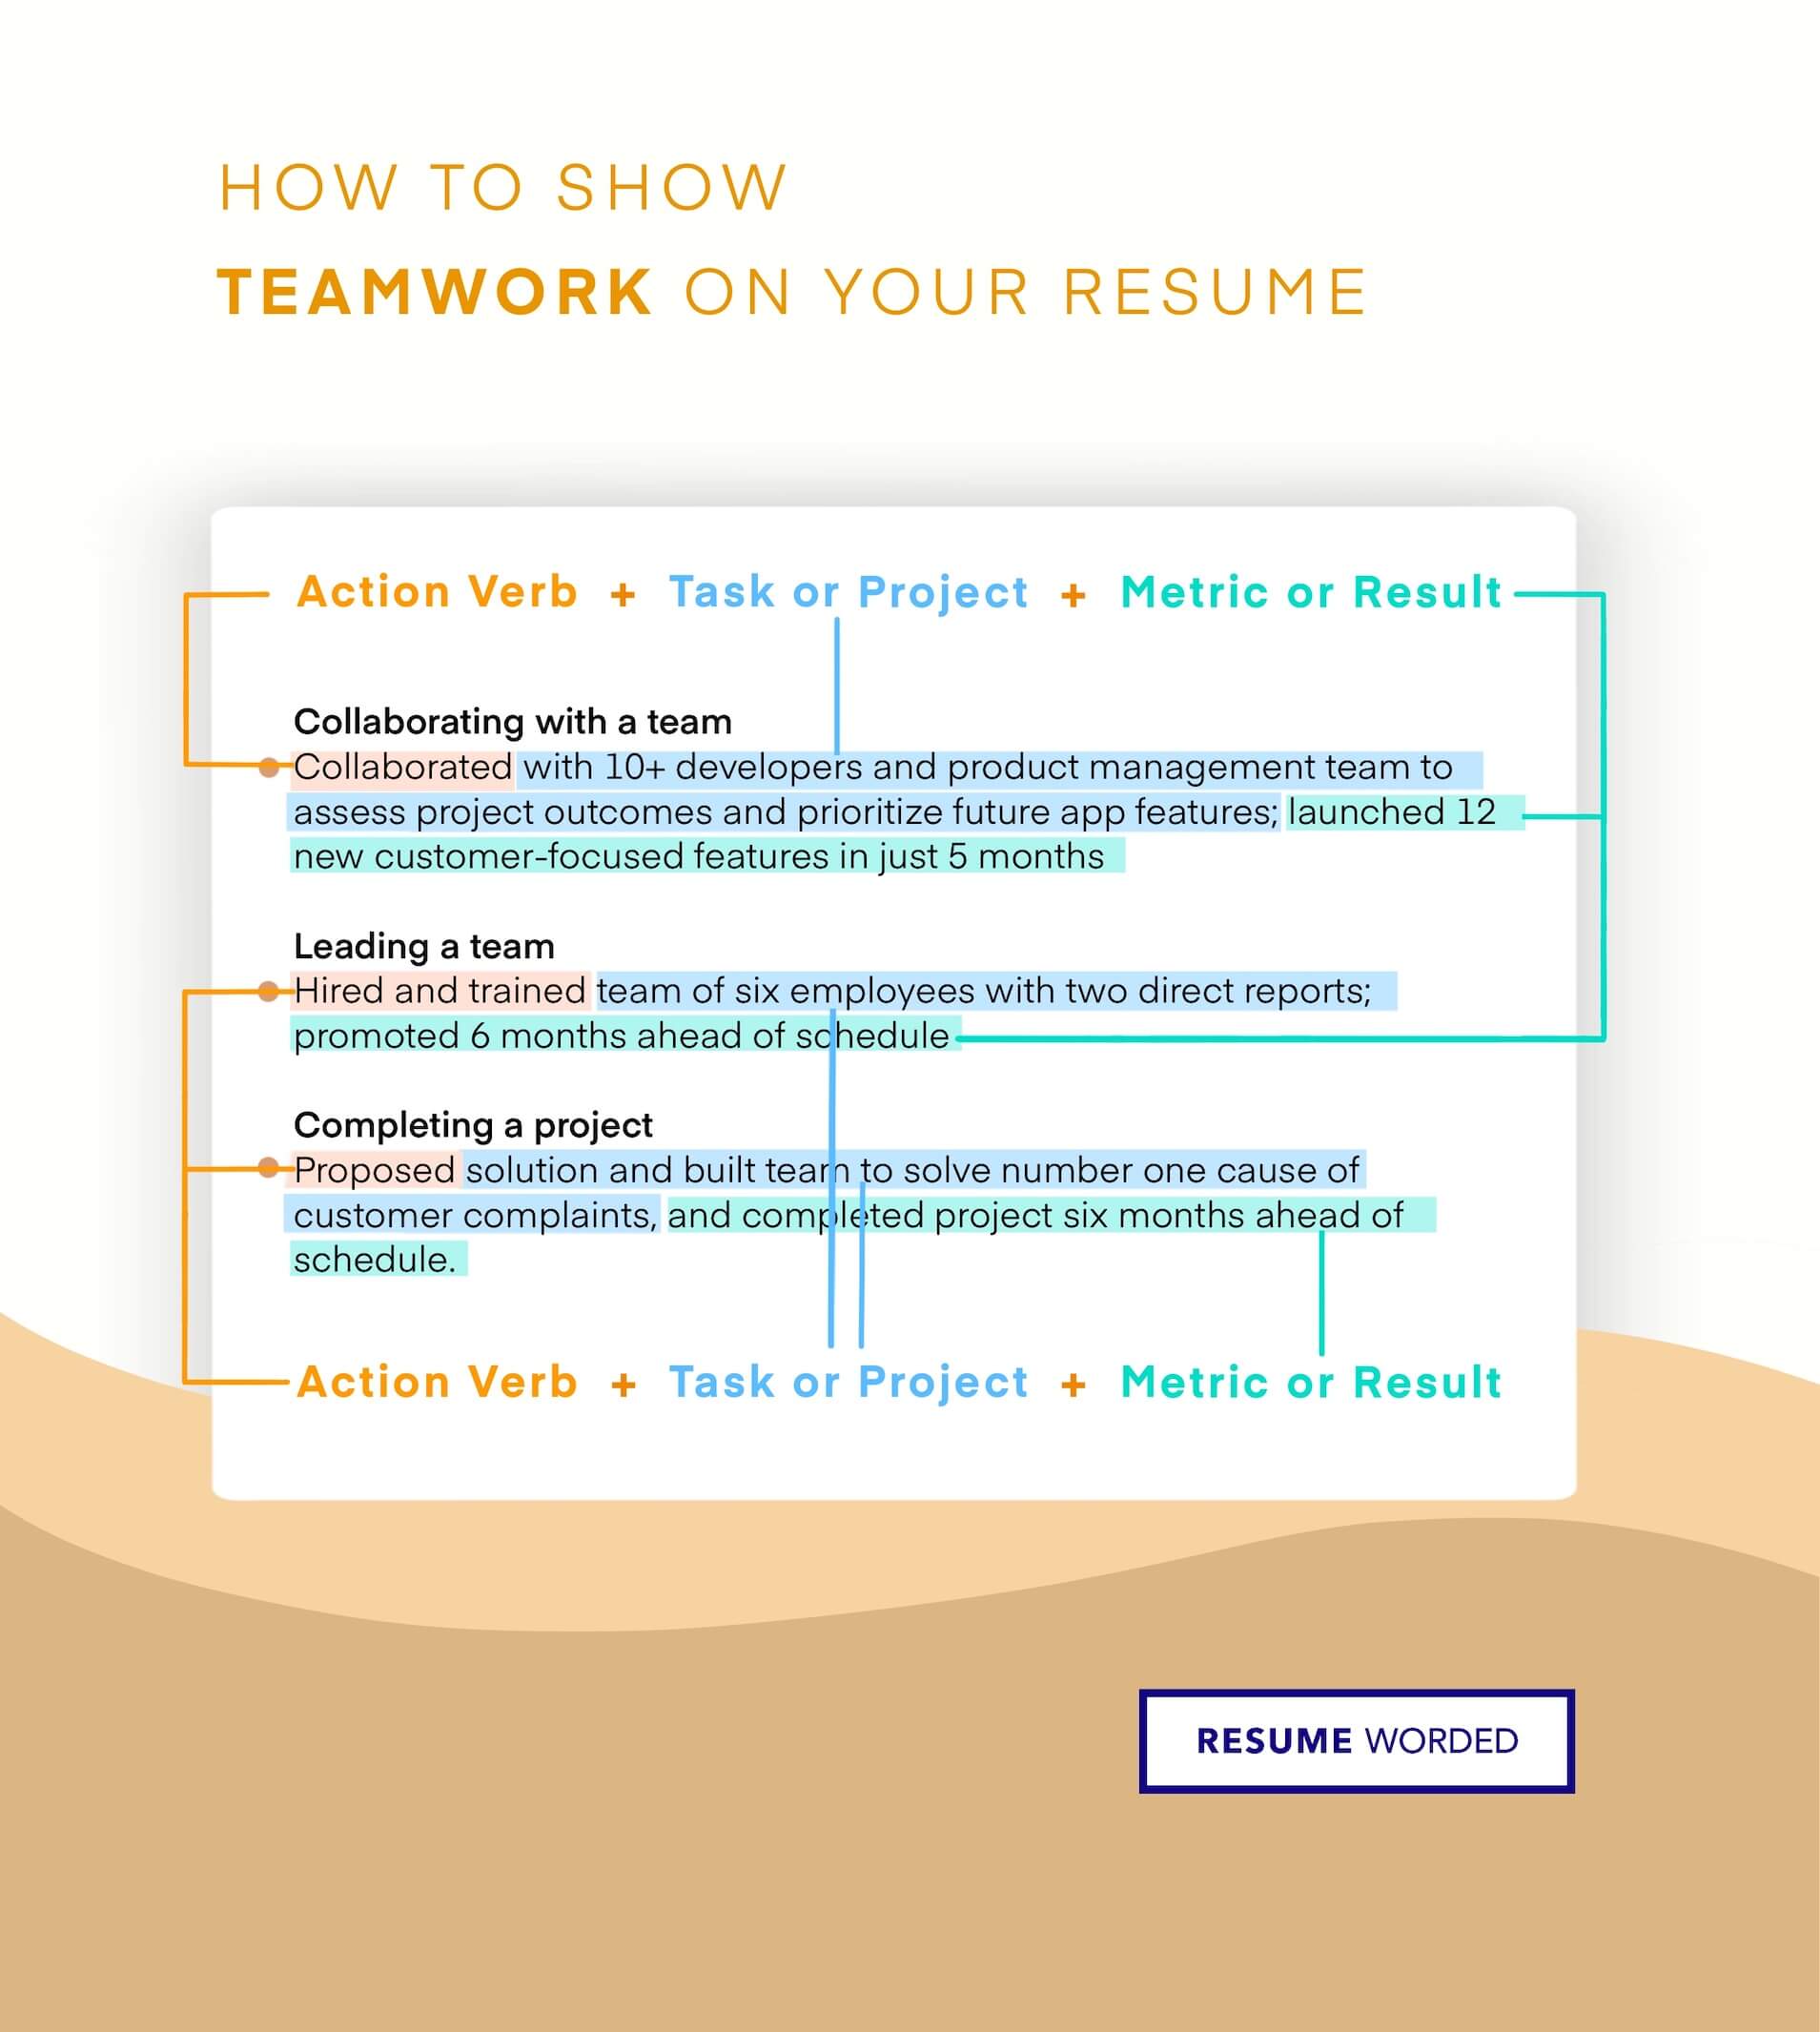 Emphasize leadership and teamwork - Senior Game Designer Resume